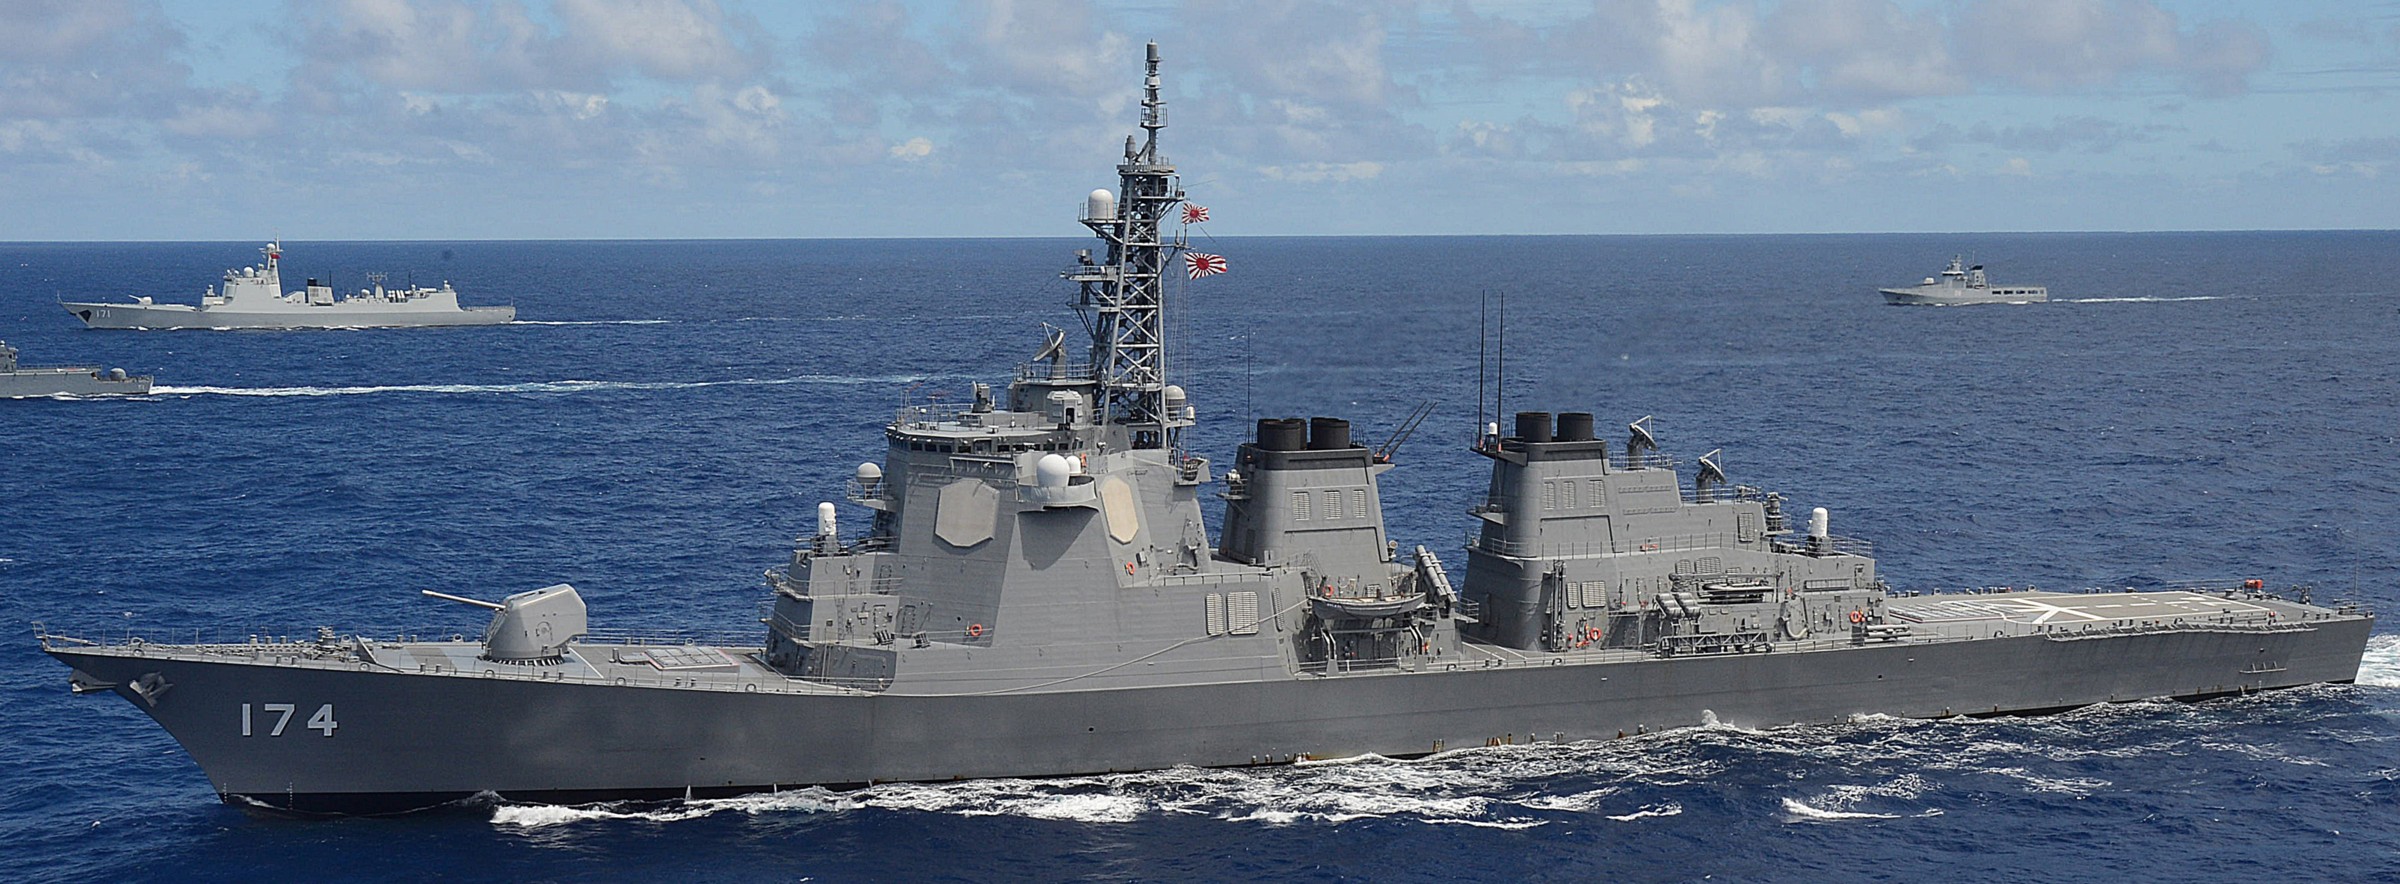 ddg-174 js kirishima kongo class guided missile destroyer aegis japan maritime self defense force jmsdf 36